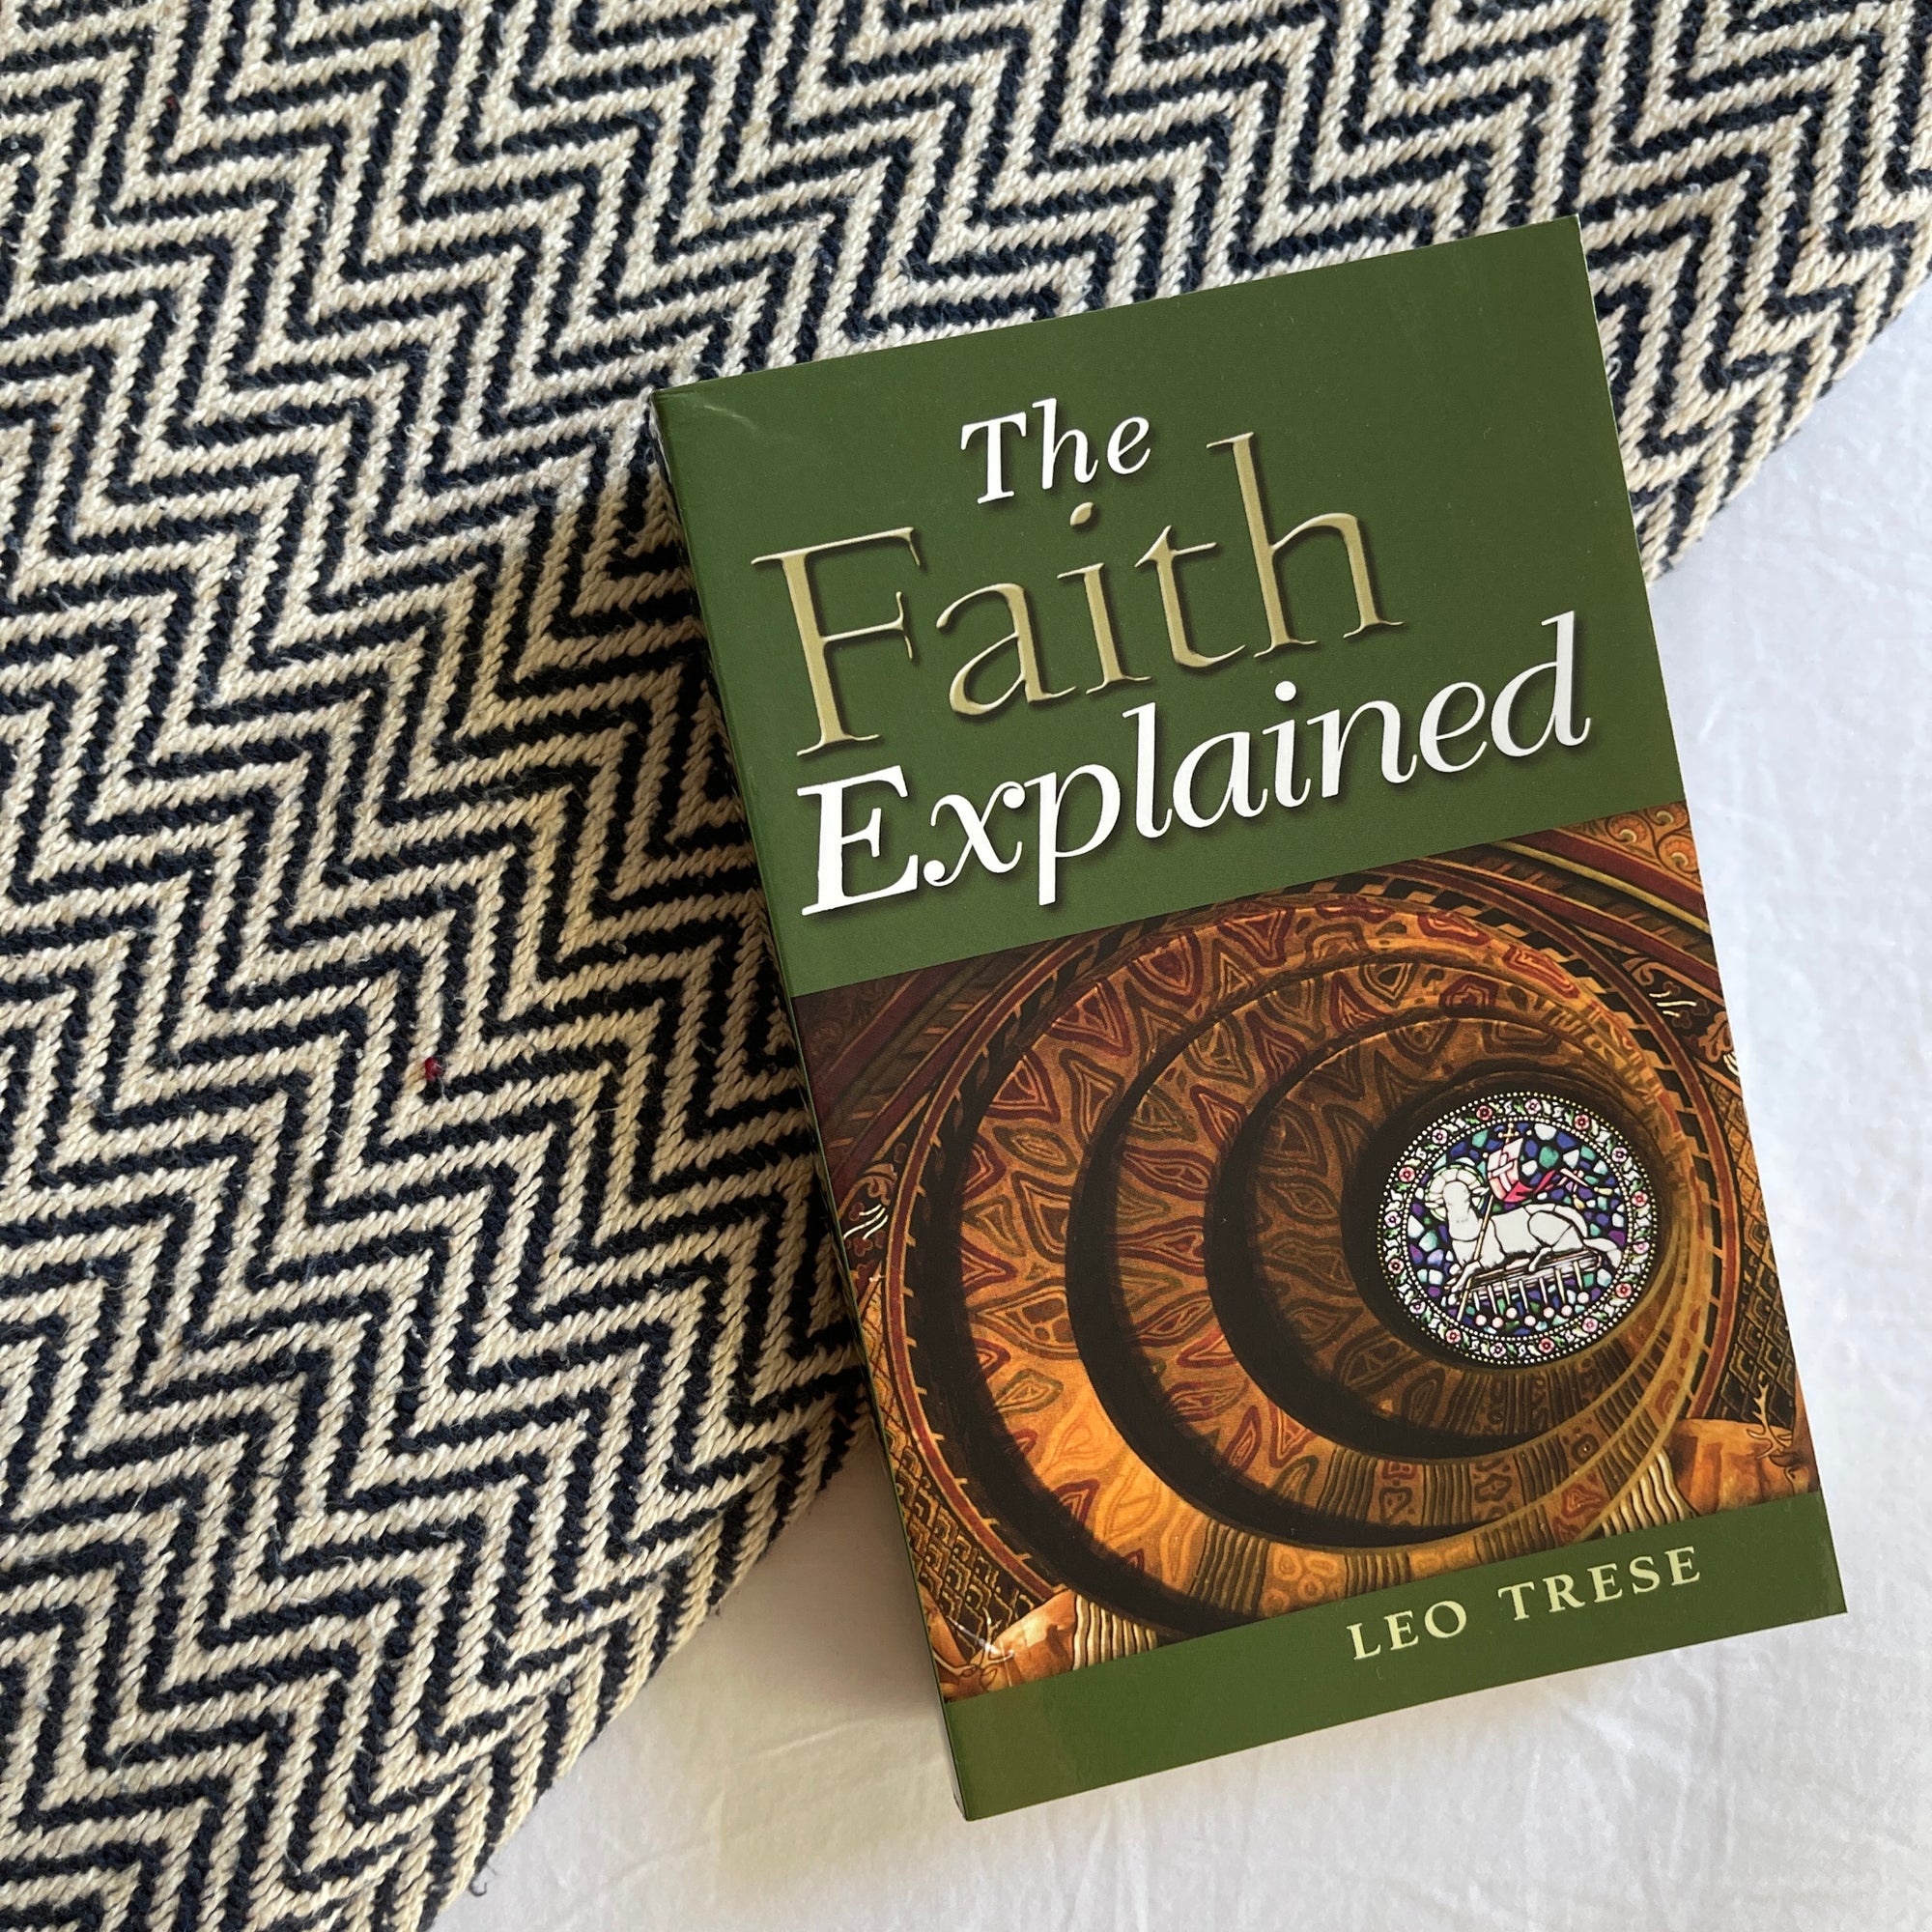 Books on Basic Catholic Teachings to Deepen Your Faith